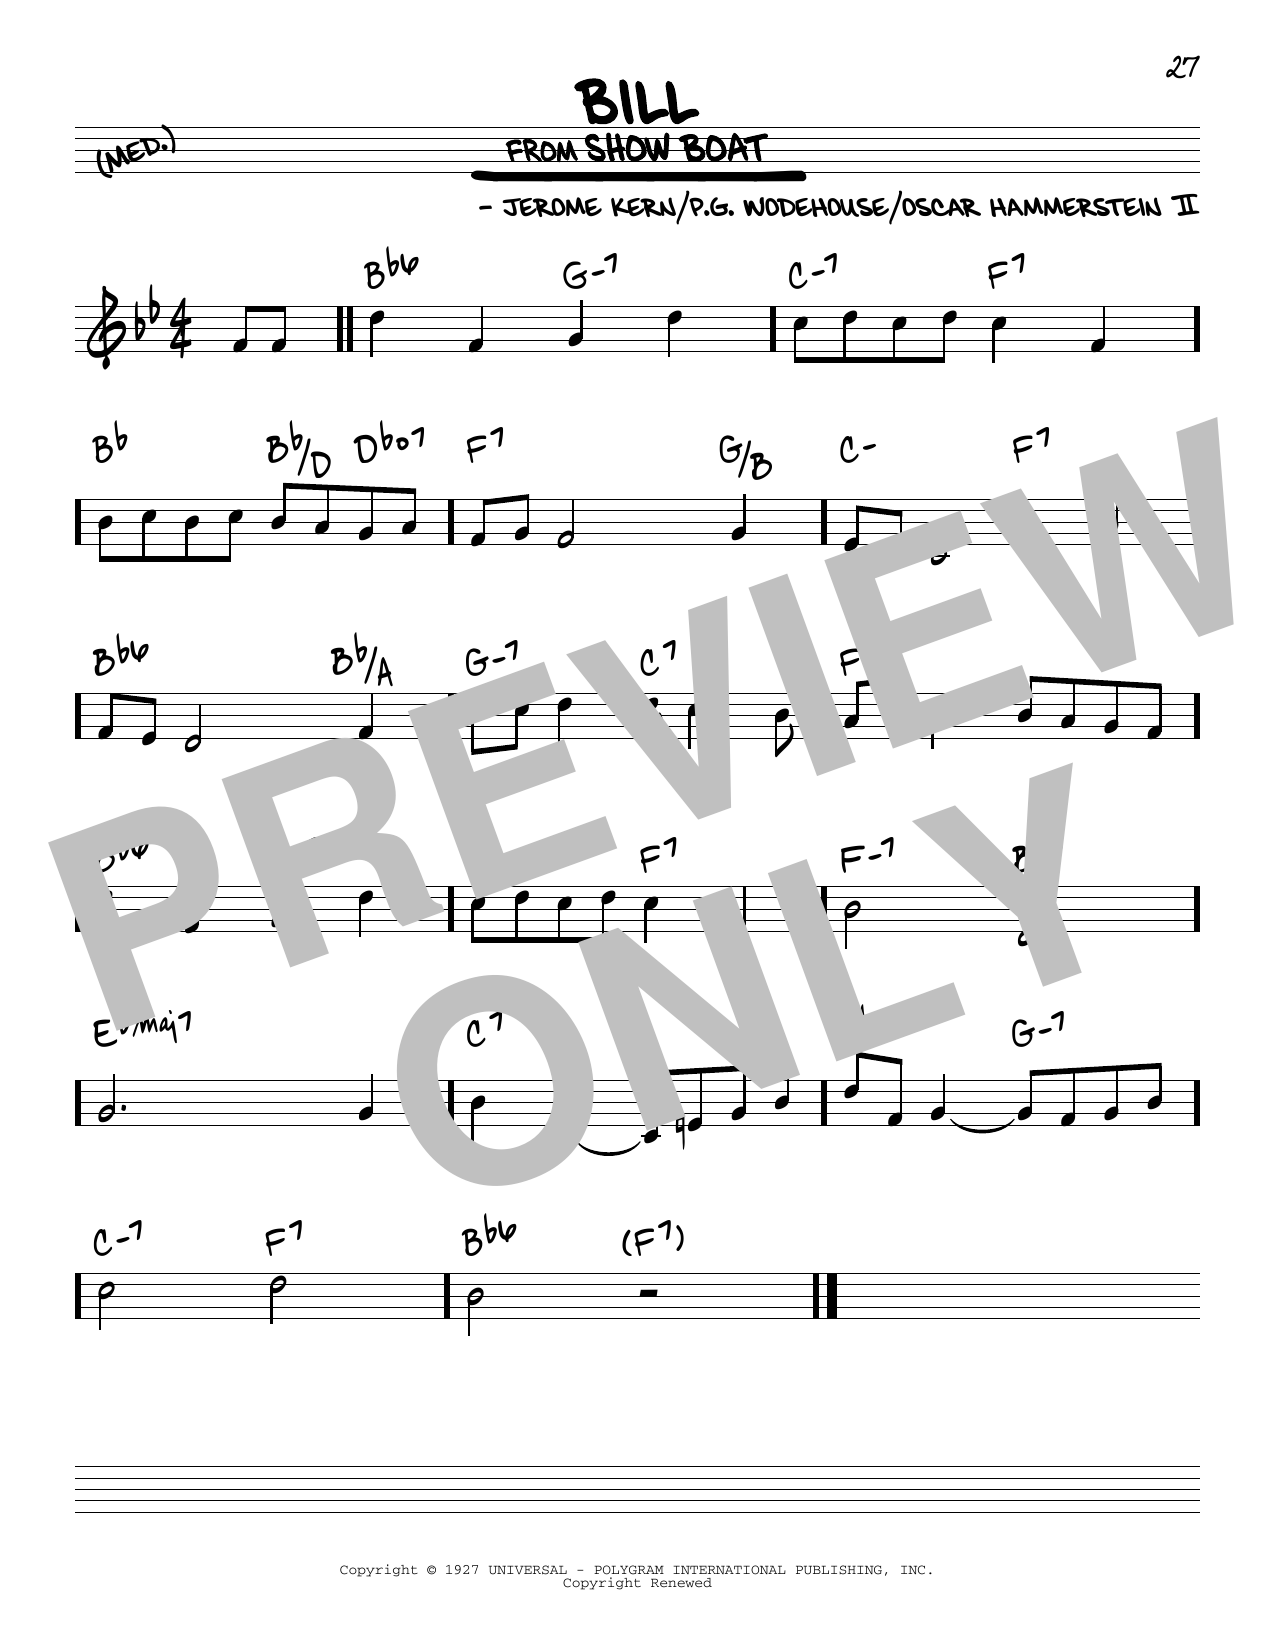 Download Jerome Kern Bill Sheet Music